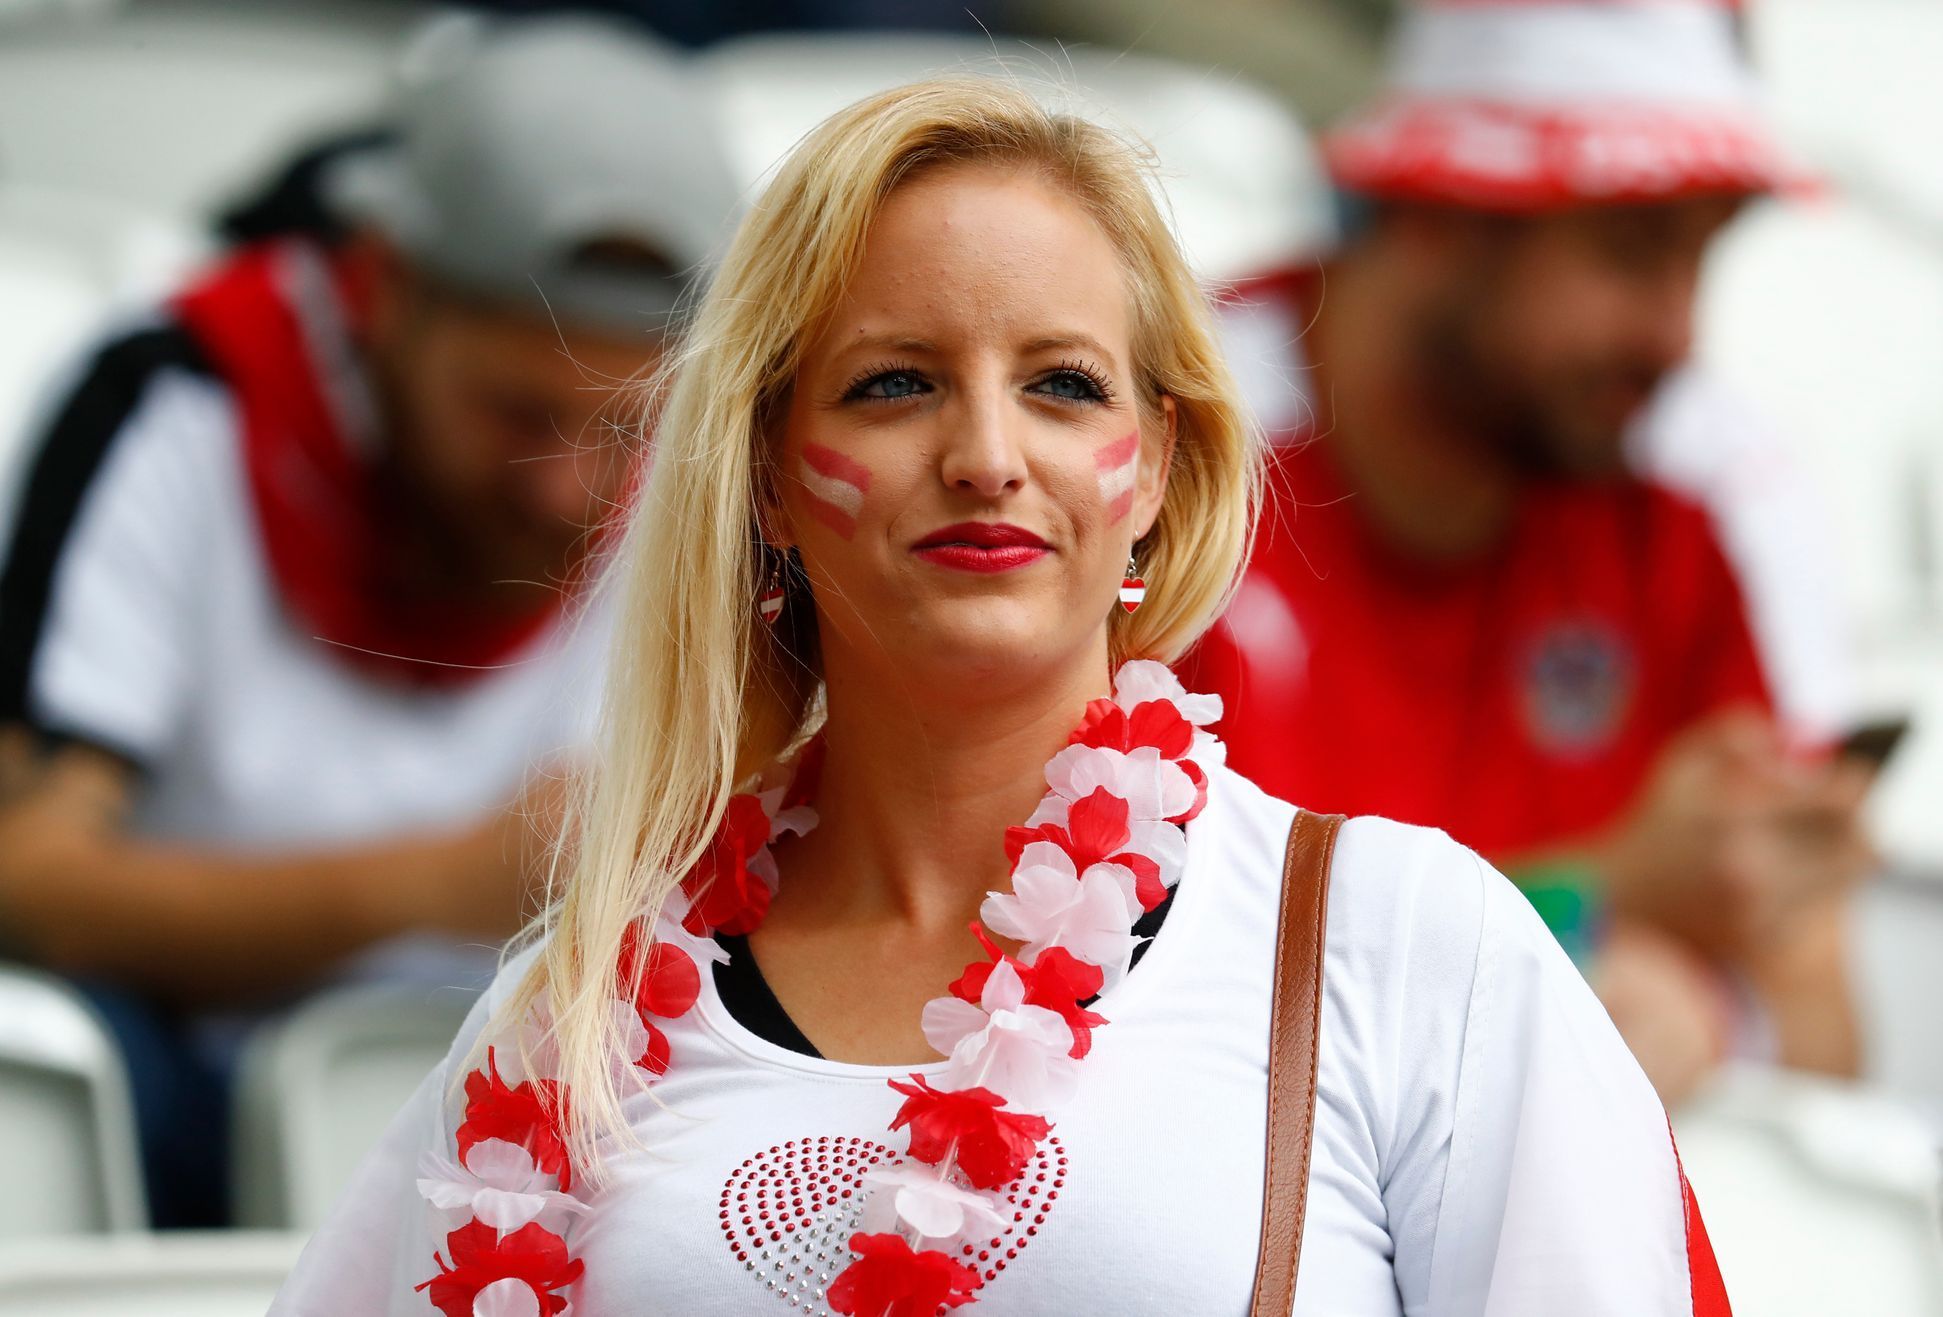 Euro 2016, Maďarsko-Rakousko: fanynka Rakouska